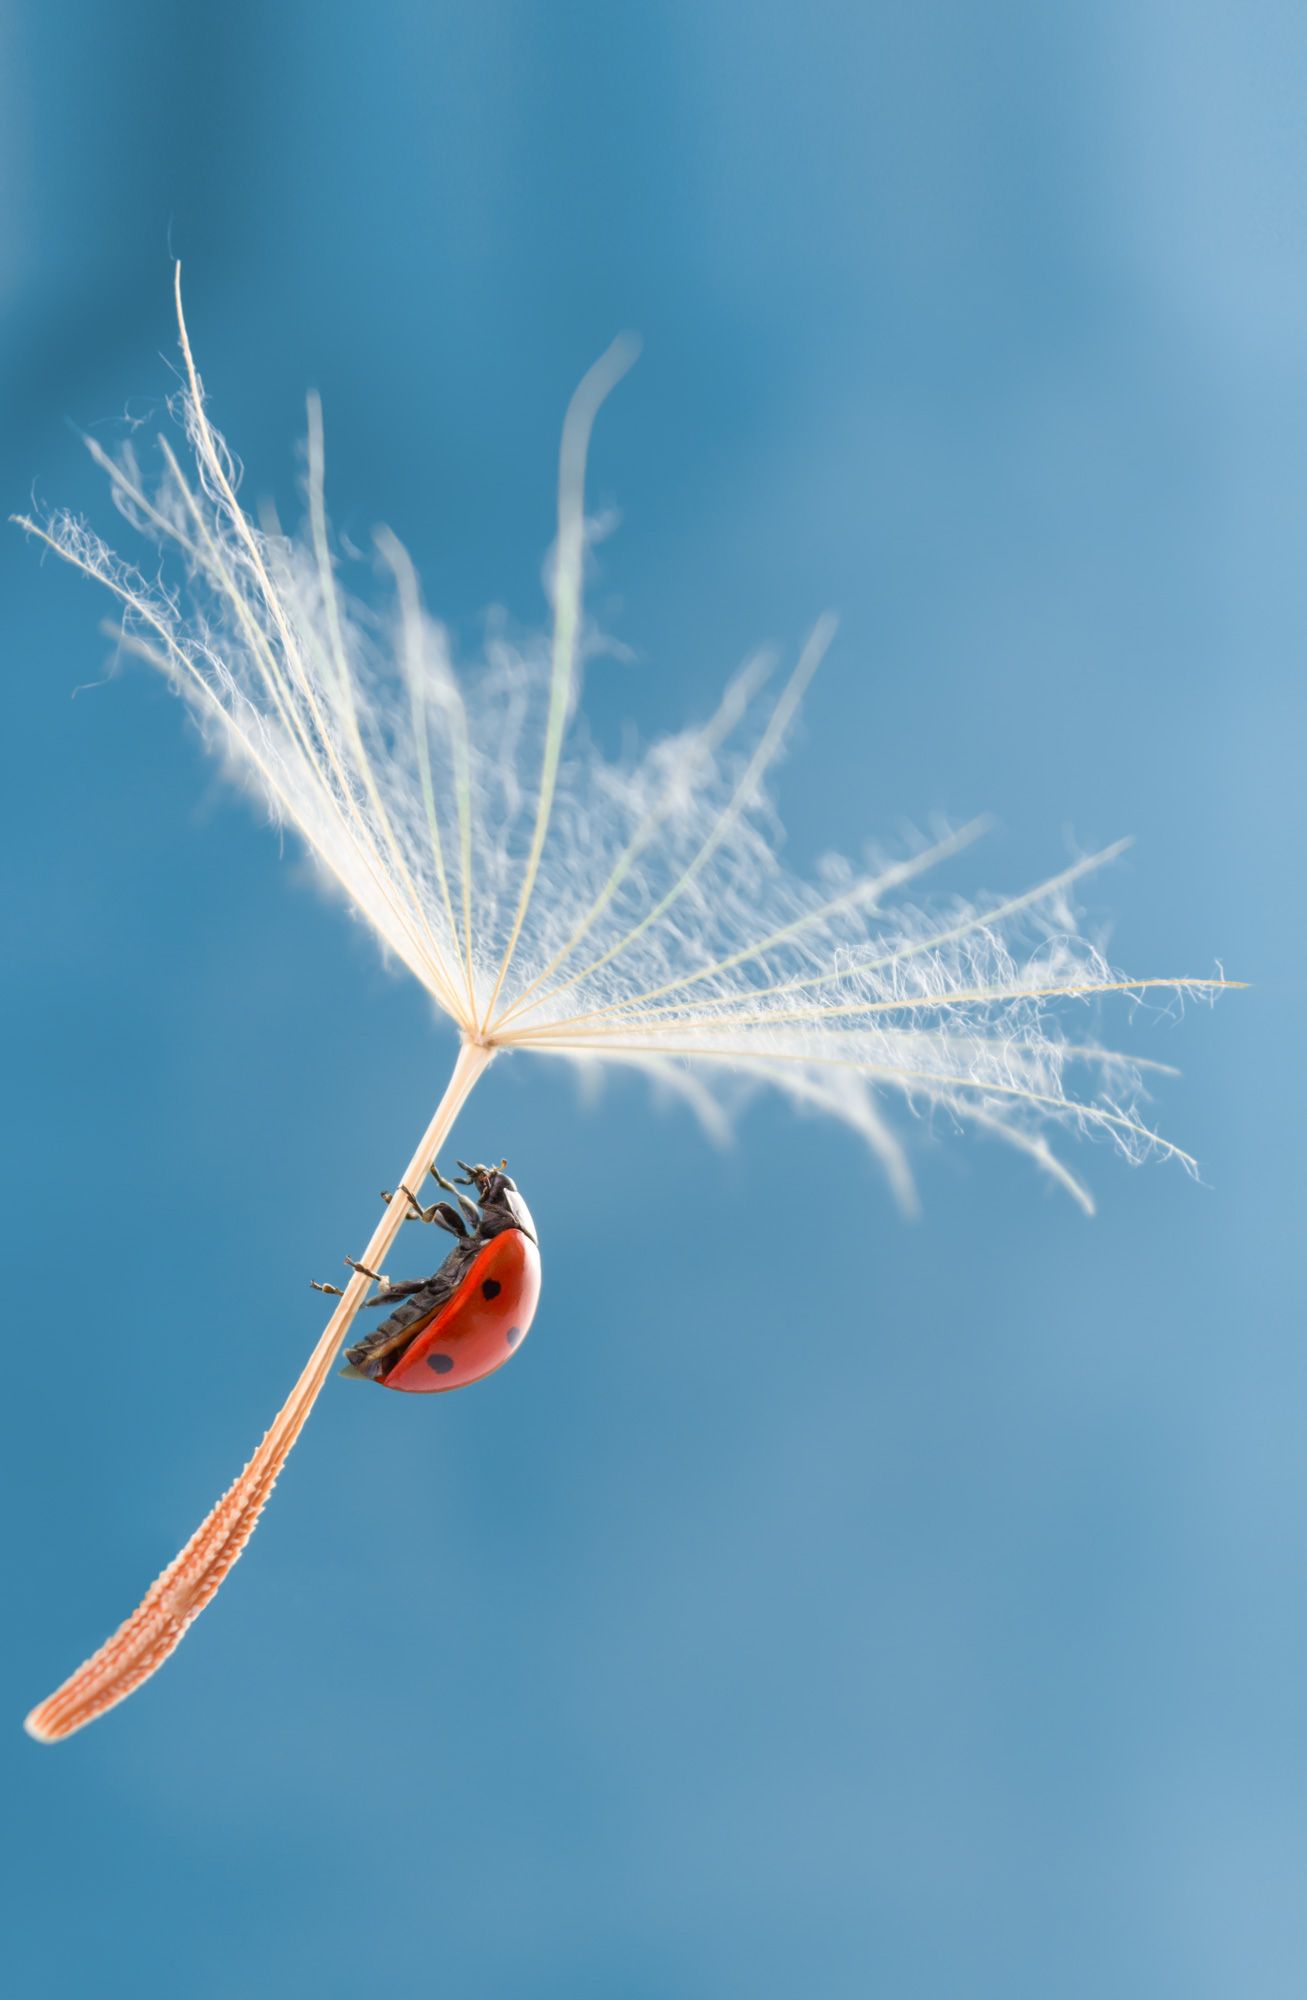 #ladybug #insect #macro #nature #dandelion #macrophotography #wallpaper #background #backdrop, Вікторія Крулько